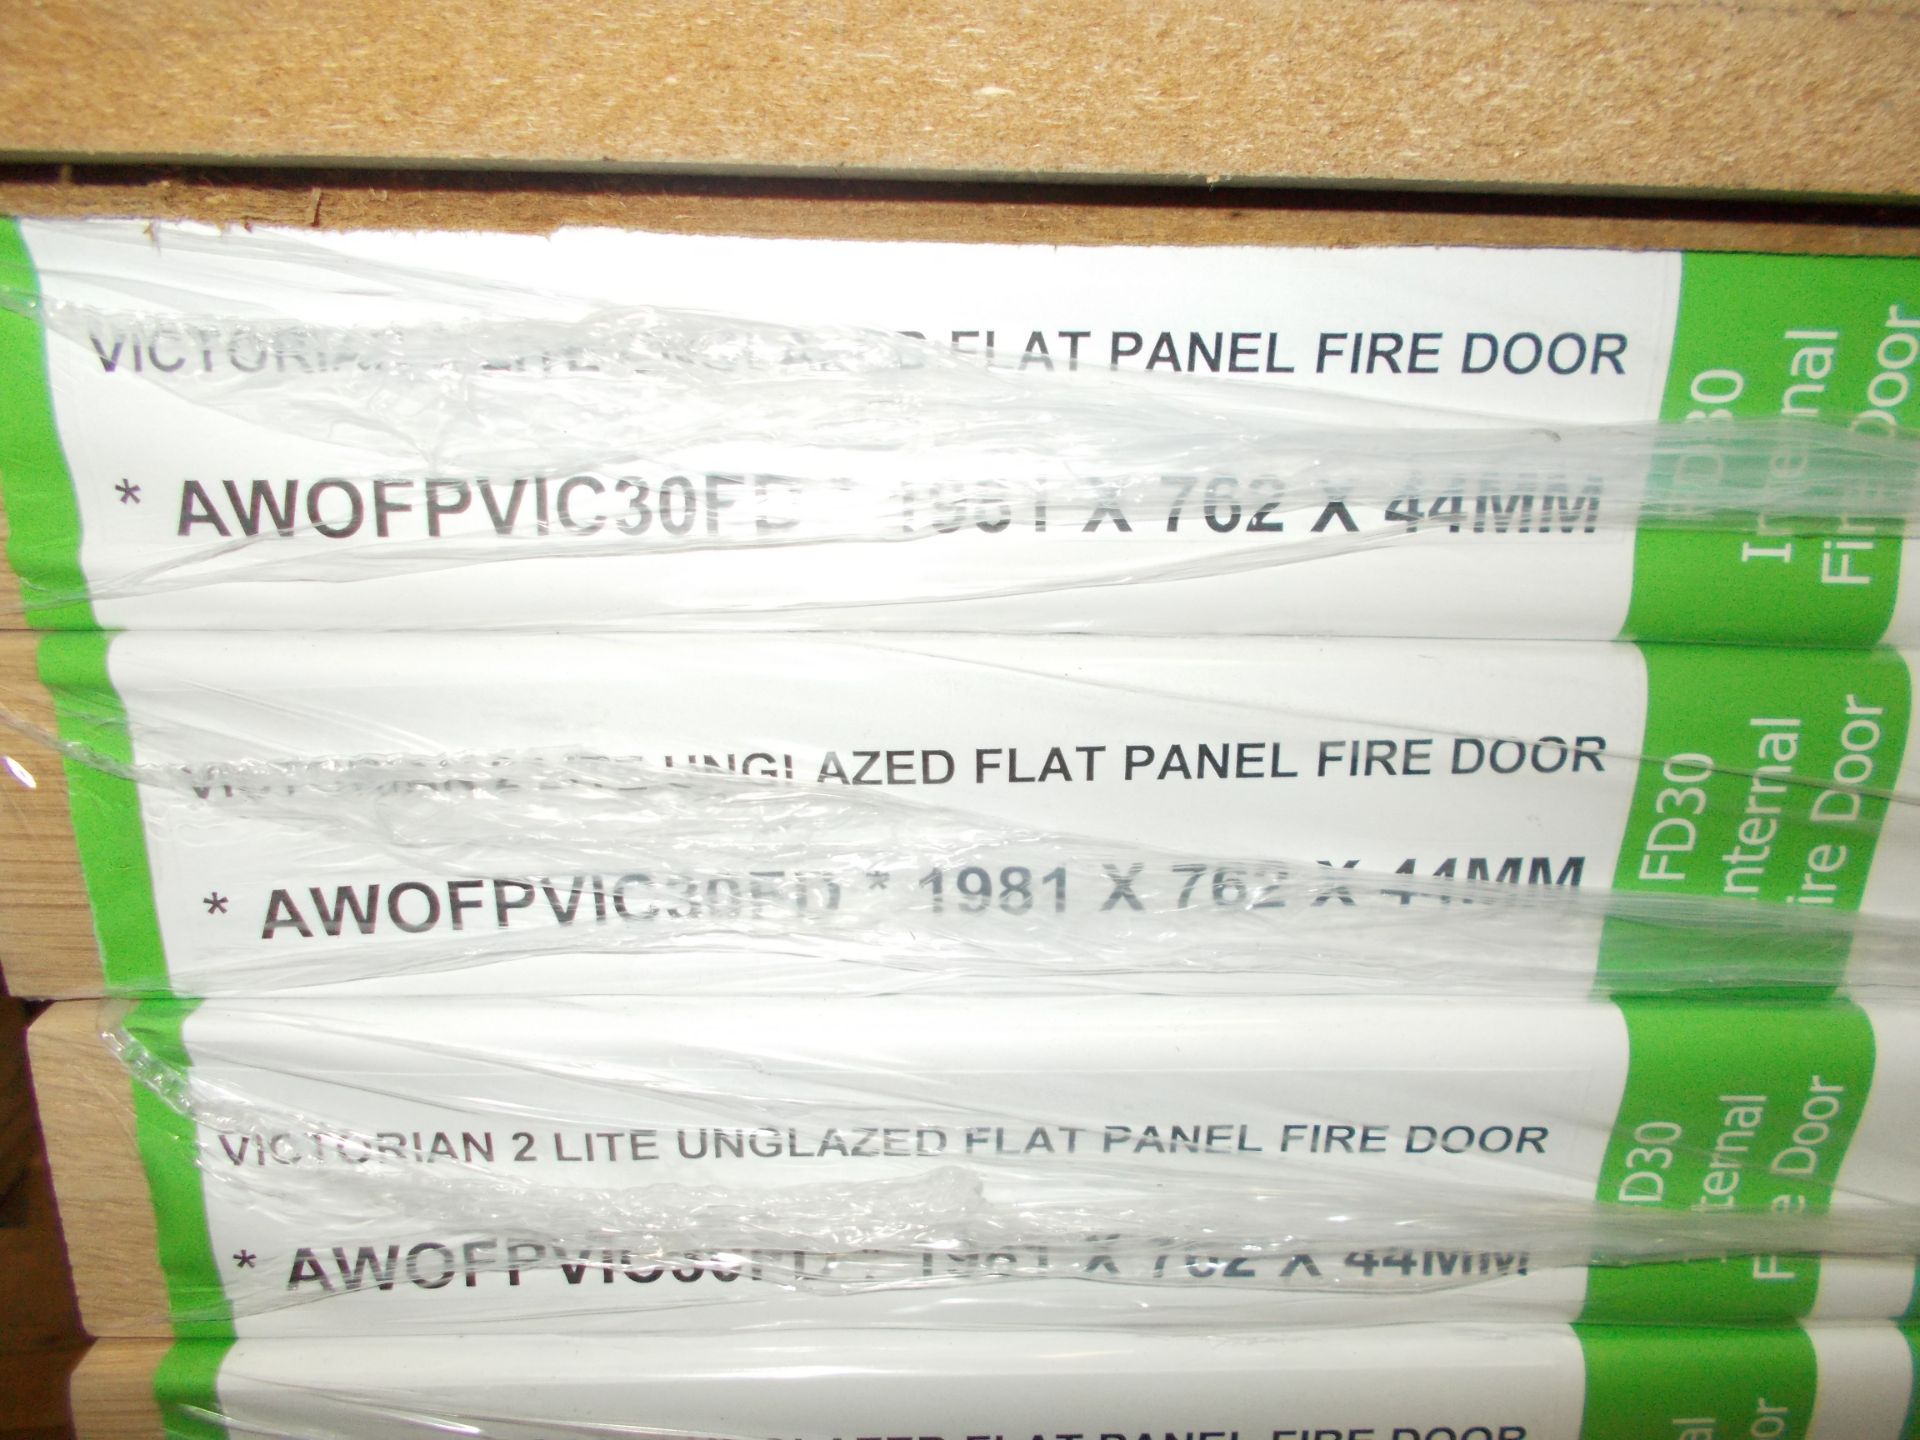 11 x Victorian Lite Unglazed Flat Panel FD30 Internal Fire Door,AWOFPVIC30FD, 1981x762x44mm - Lots - Image 3 of 3